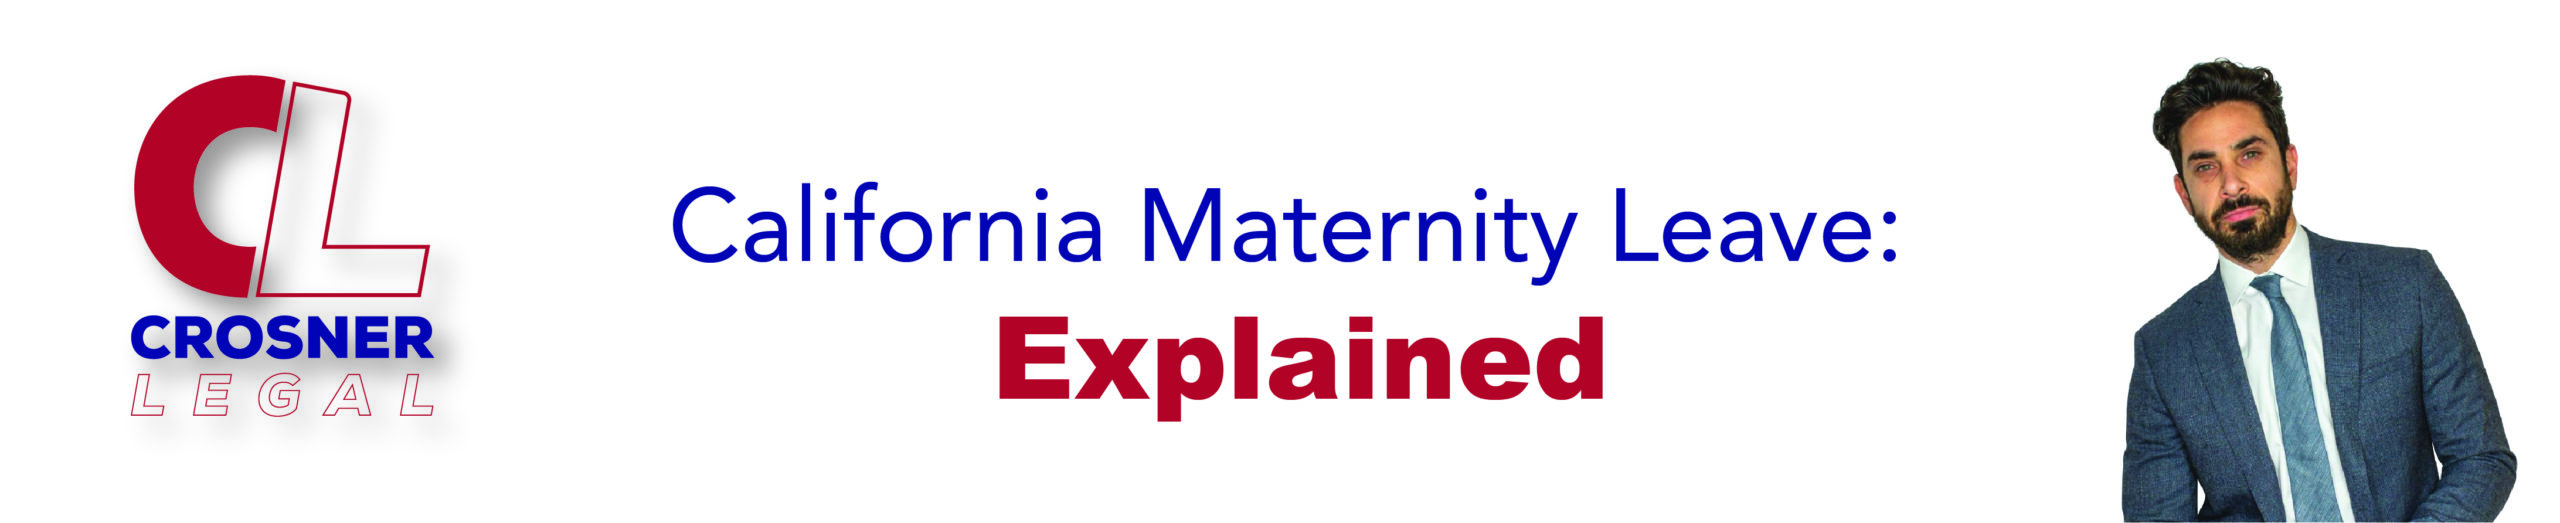 California Maternity Leave: Explained